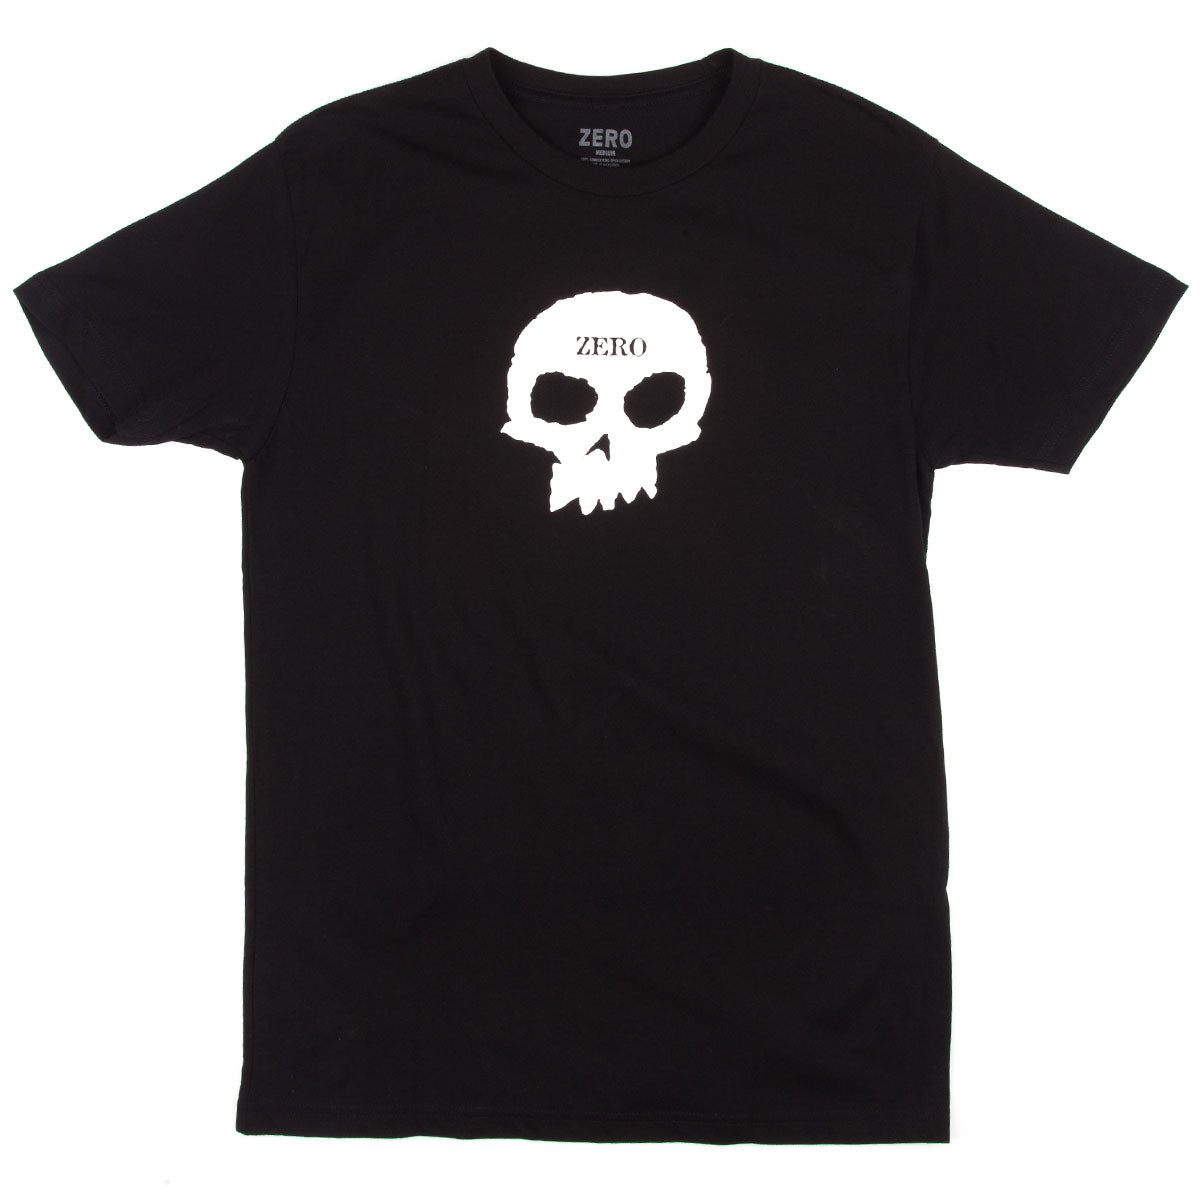 Zero Single Skull T-Shirt - Black image 1